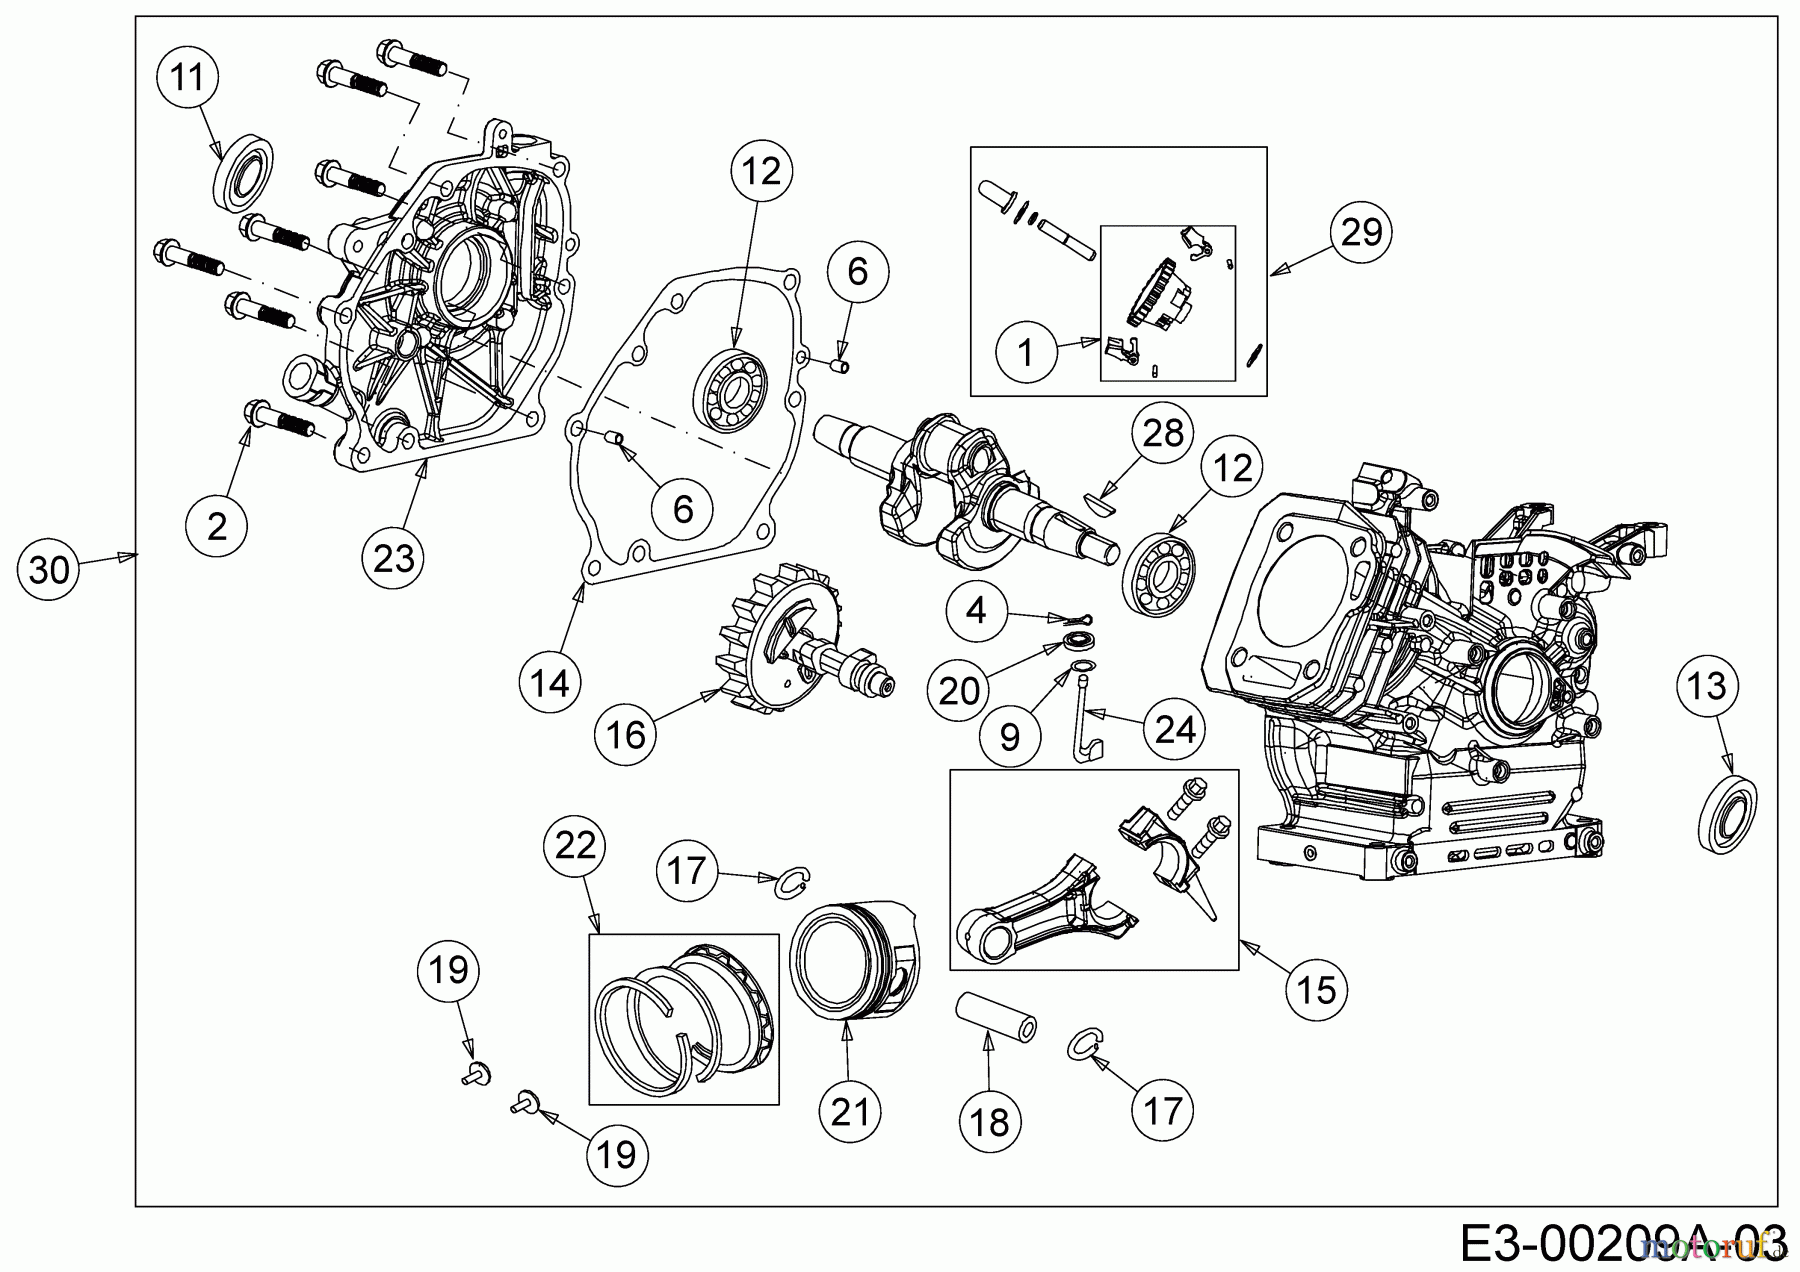  MTD-Engines Horizontal 370-JHA 752Z370-JHA  (2019) Piston, Camshaft, Crankshaft, Connecting rod